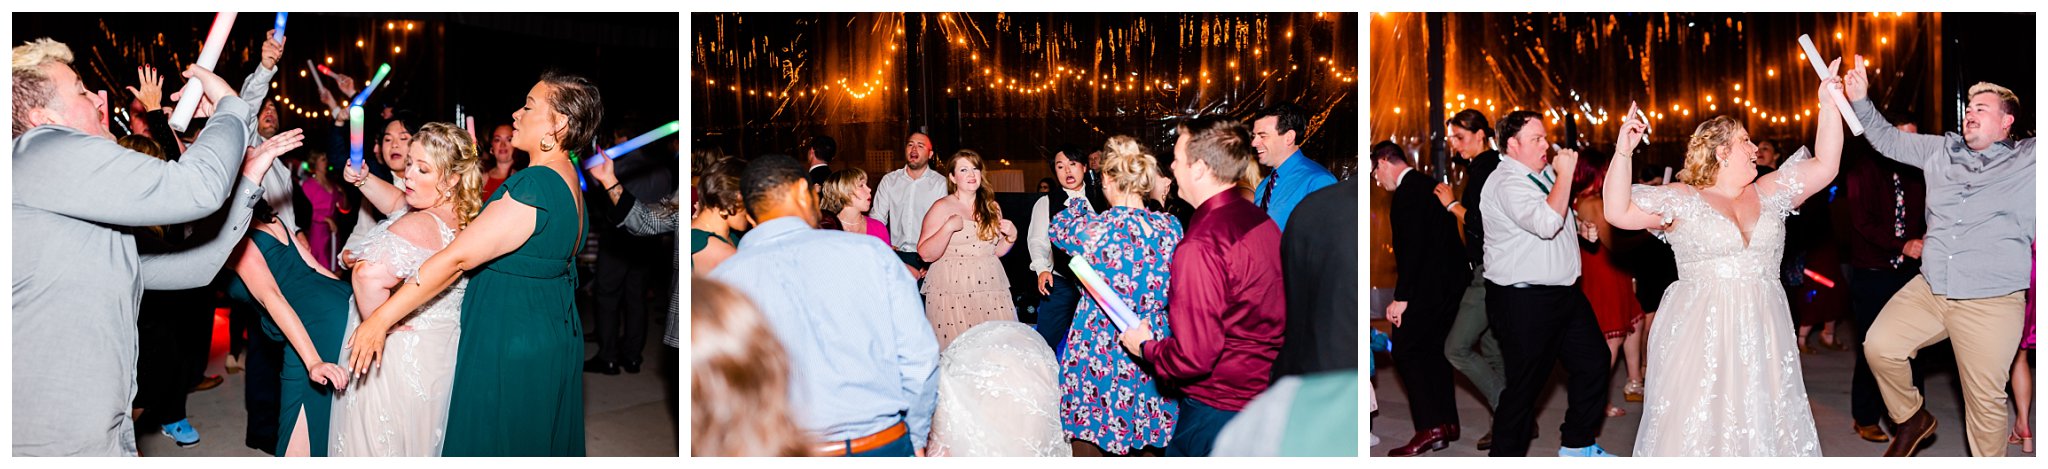 North Carolina wedding photographer captures guests on dance floor